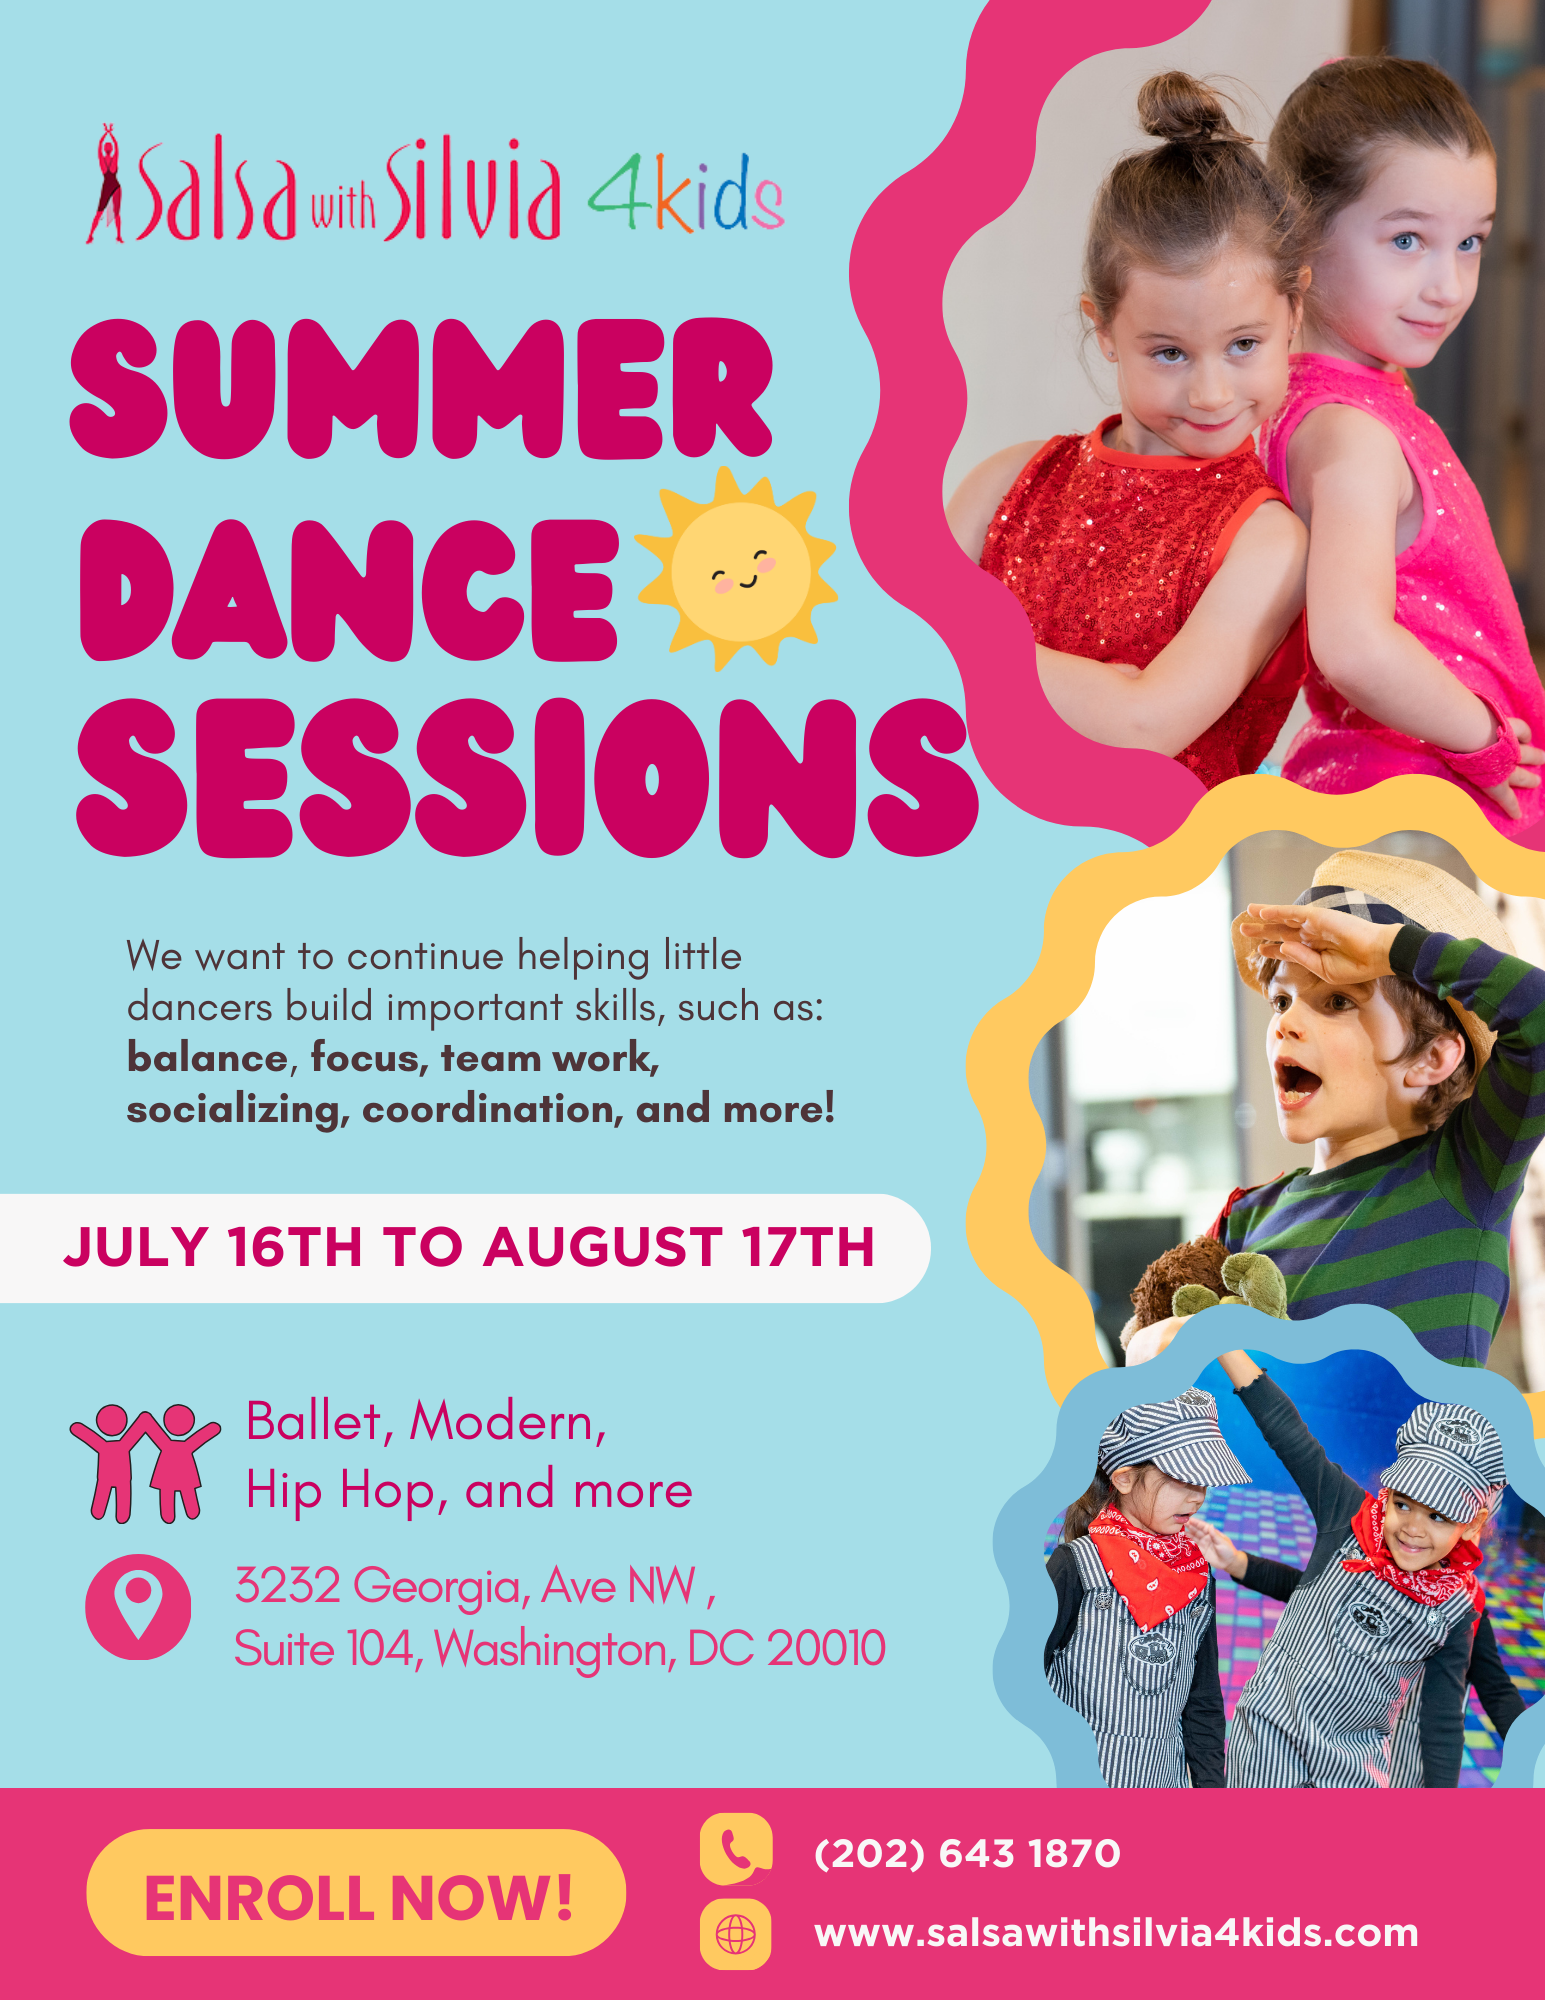 SUMMER DANCE CLASSES FOR KIDS IN WASHINGTON DC